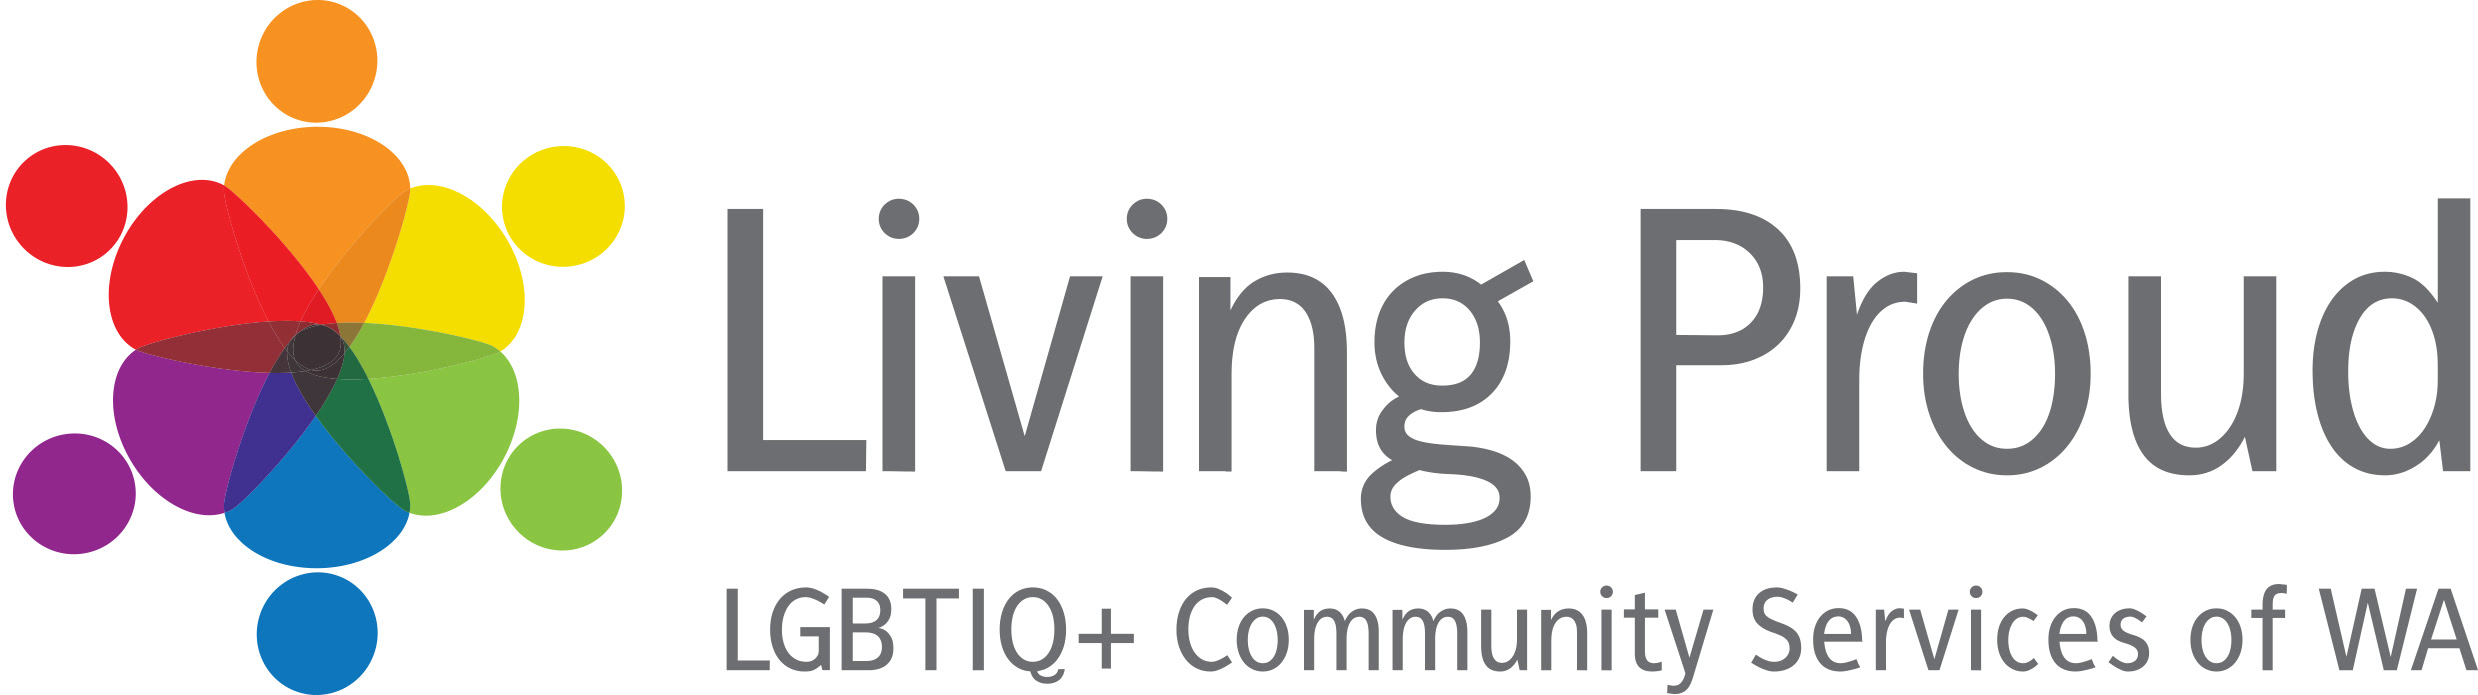 Living Proud LGBTIQ+ Community Services of WA's logo